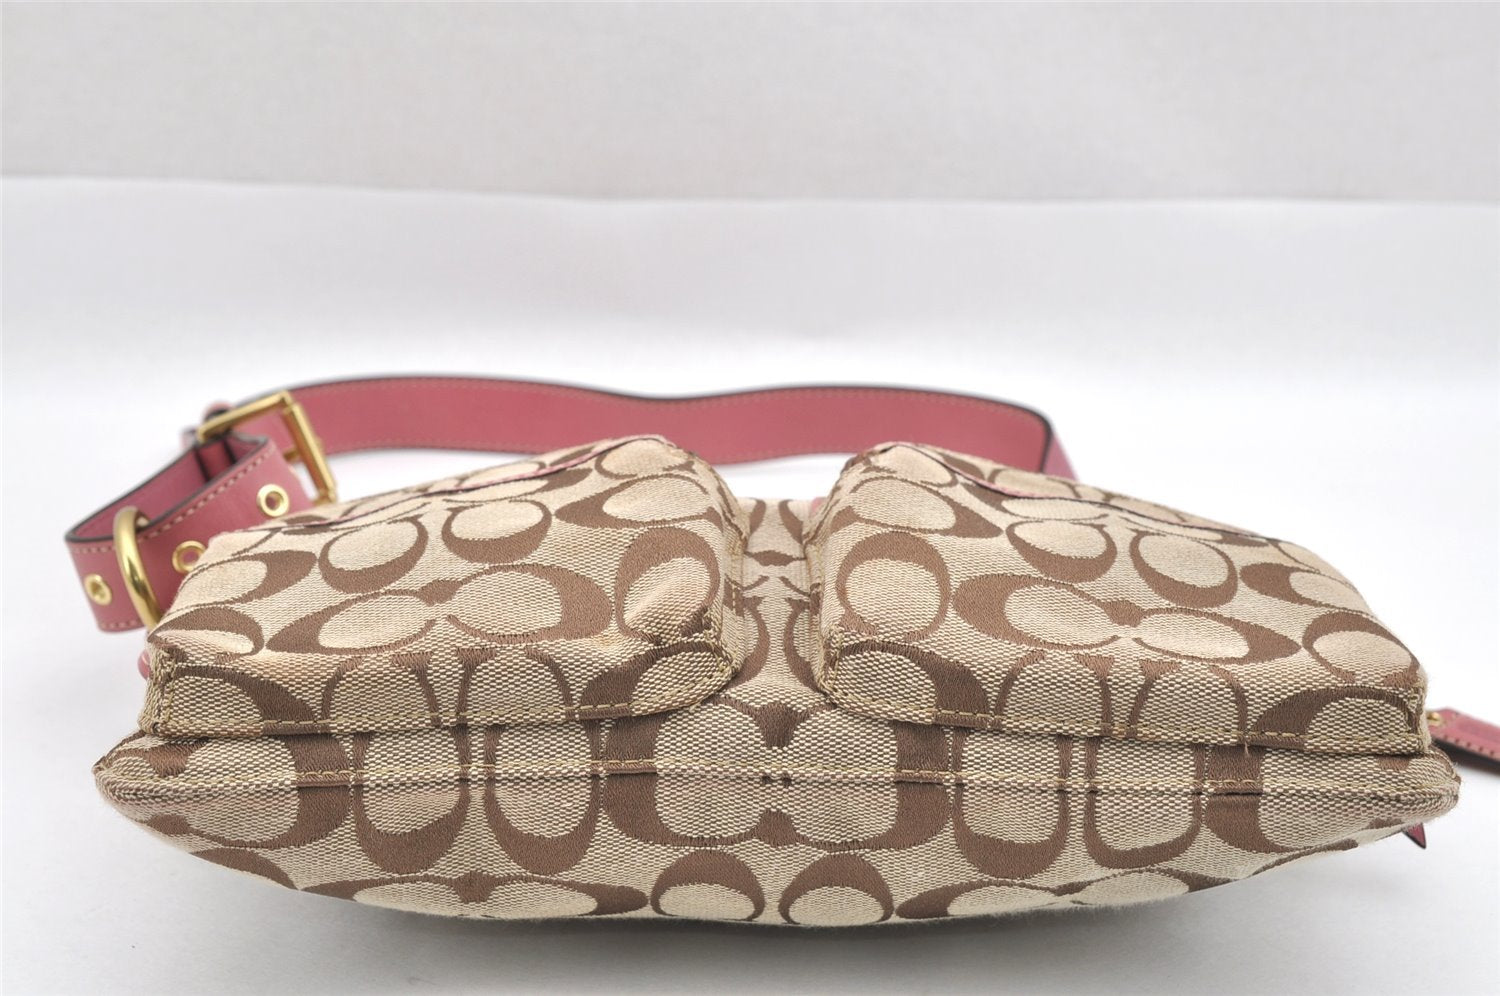 Authentic COACH Signature Shoulder Hand Bag Purse Canvas Leather Brown 7148I